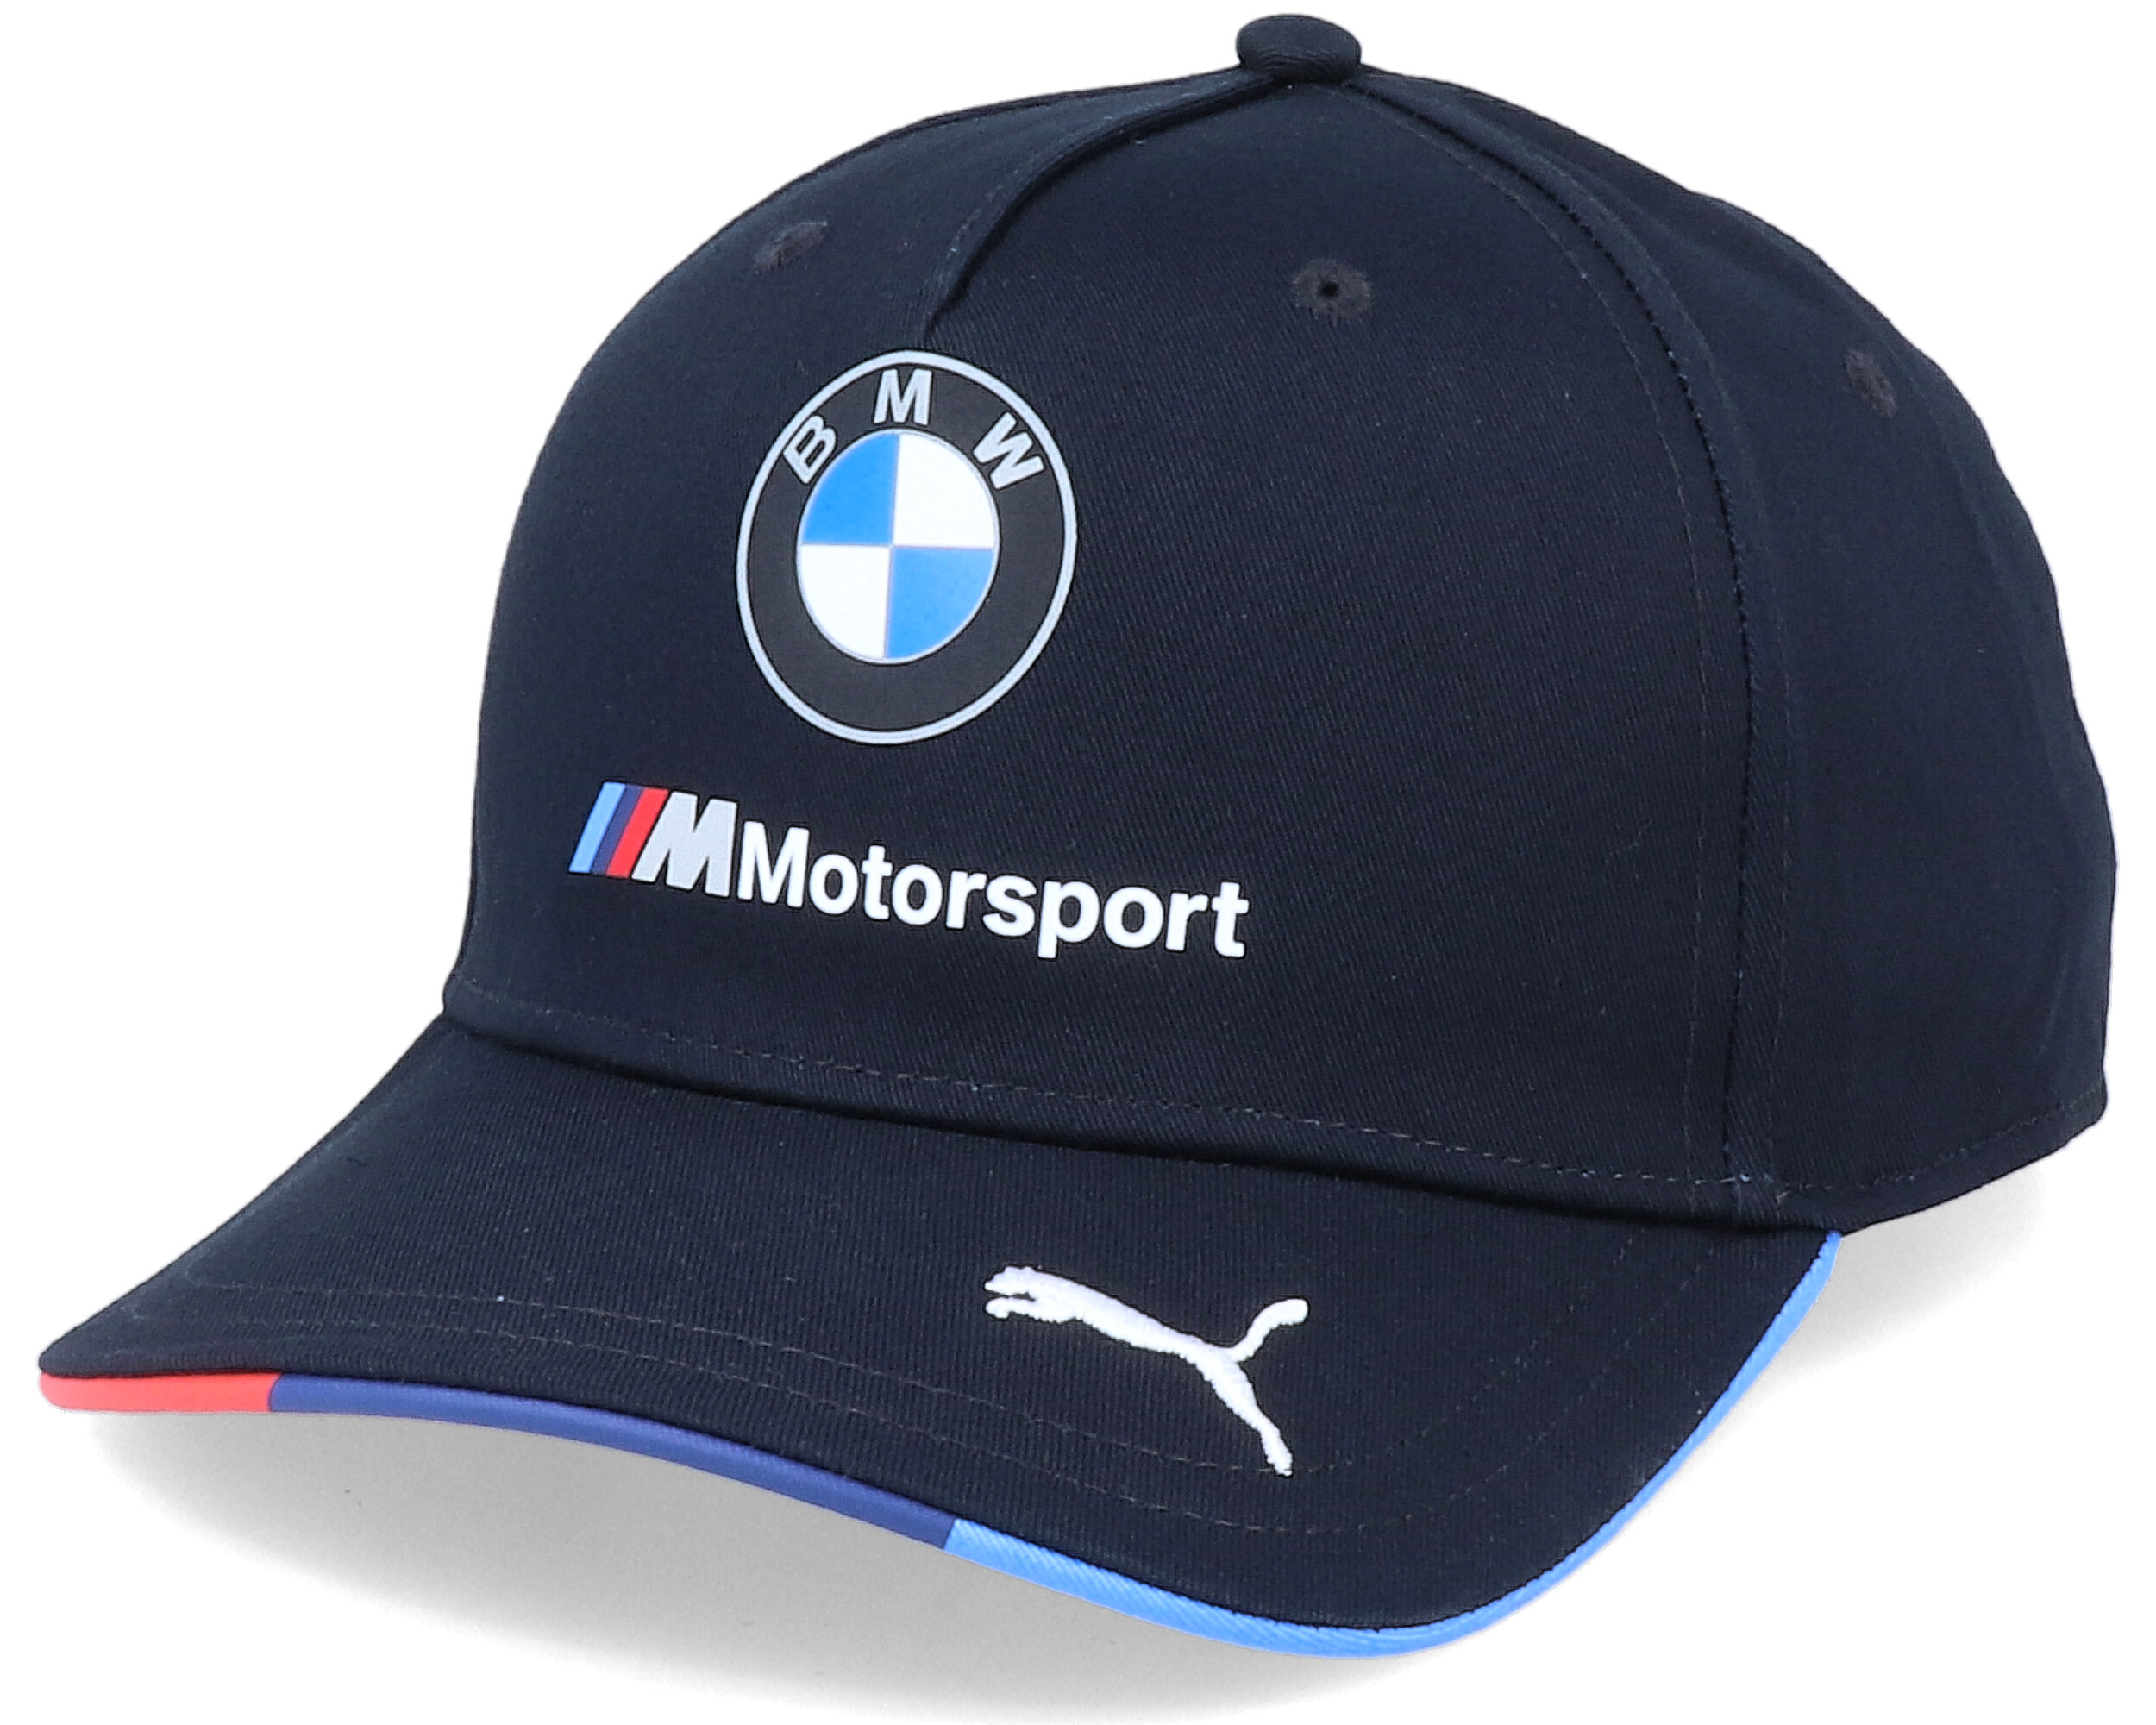 BMW M Motorsport Team Cap Black Adjustable - Formula One caps